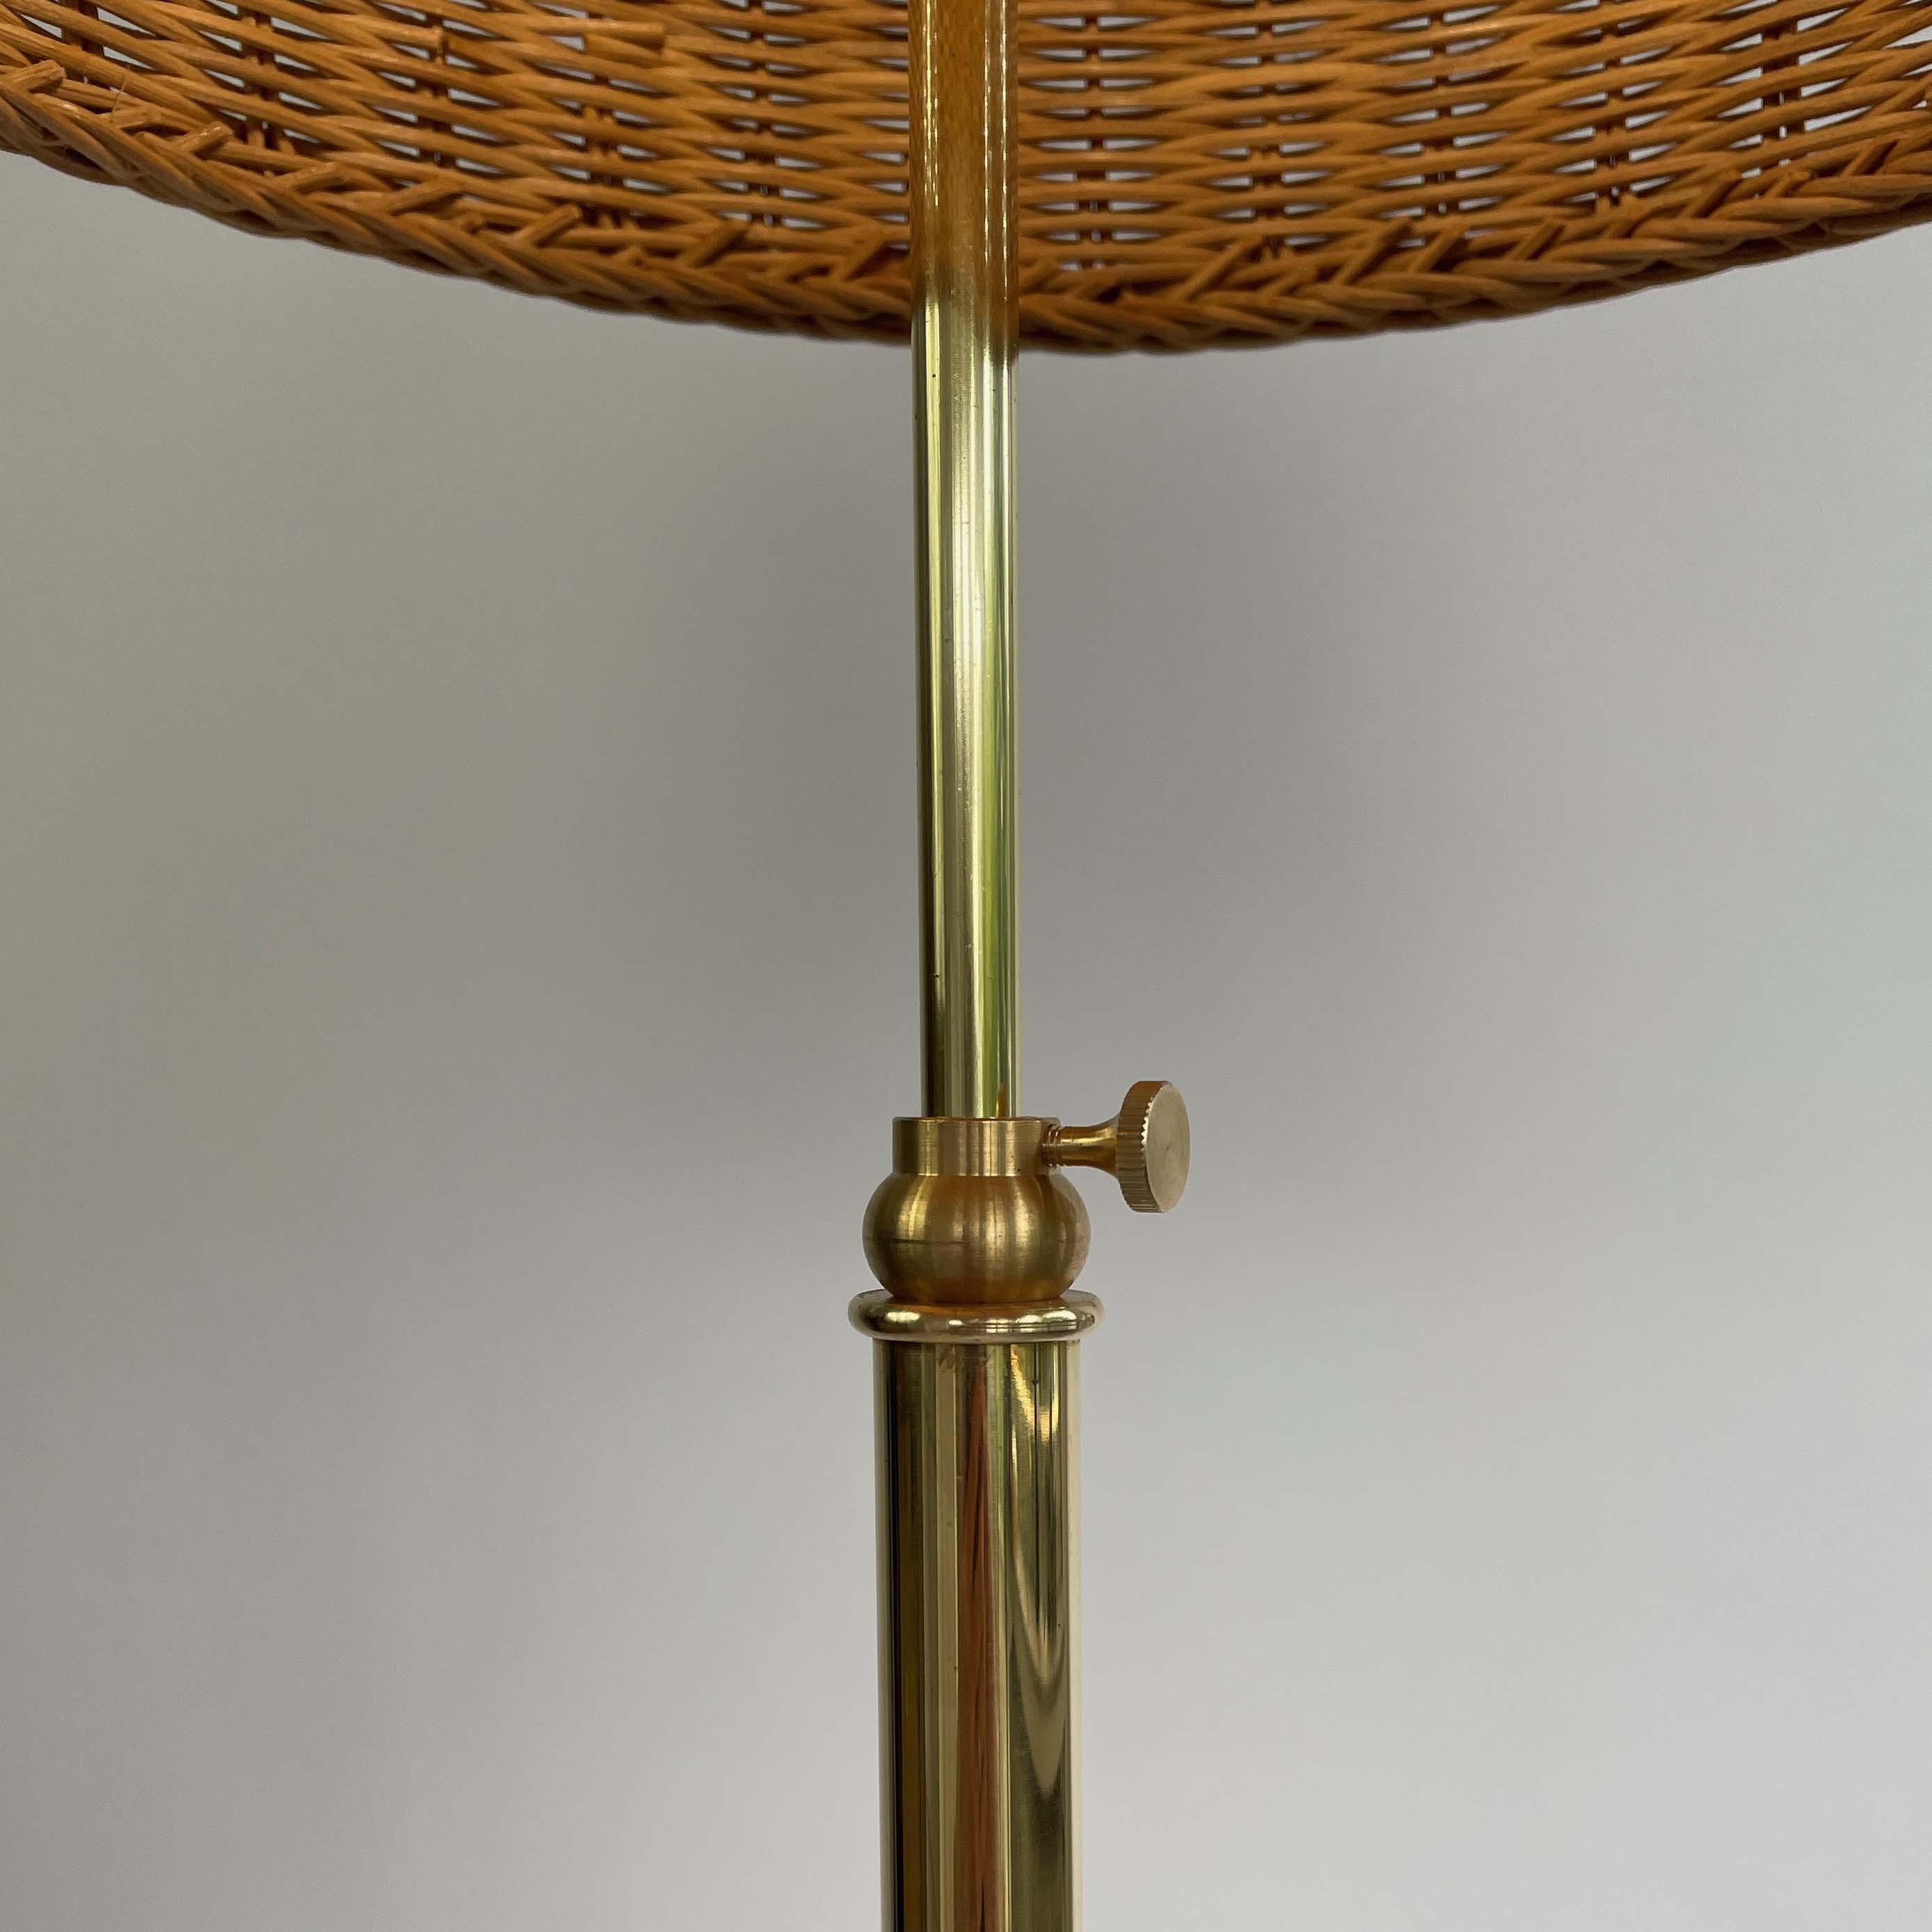 Adjustable 'Bienenkorb' Wicker Brass Floor Lamp, Jt Kalmar Style, Austria 1950s For Sale 4